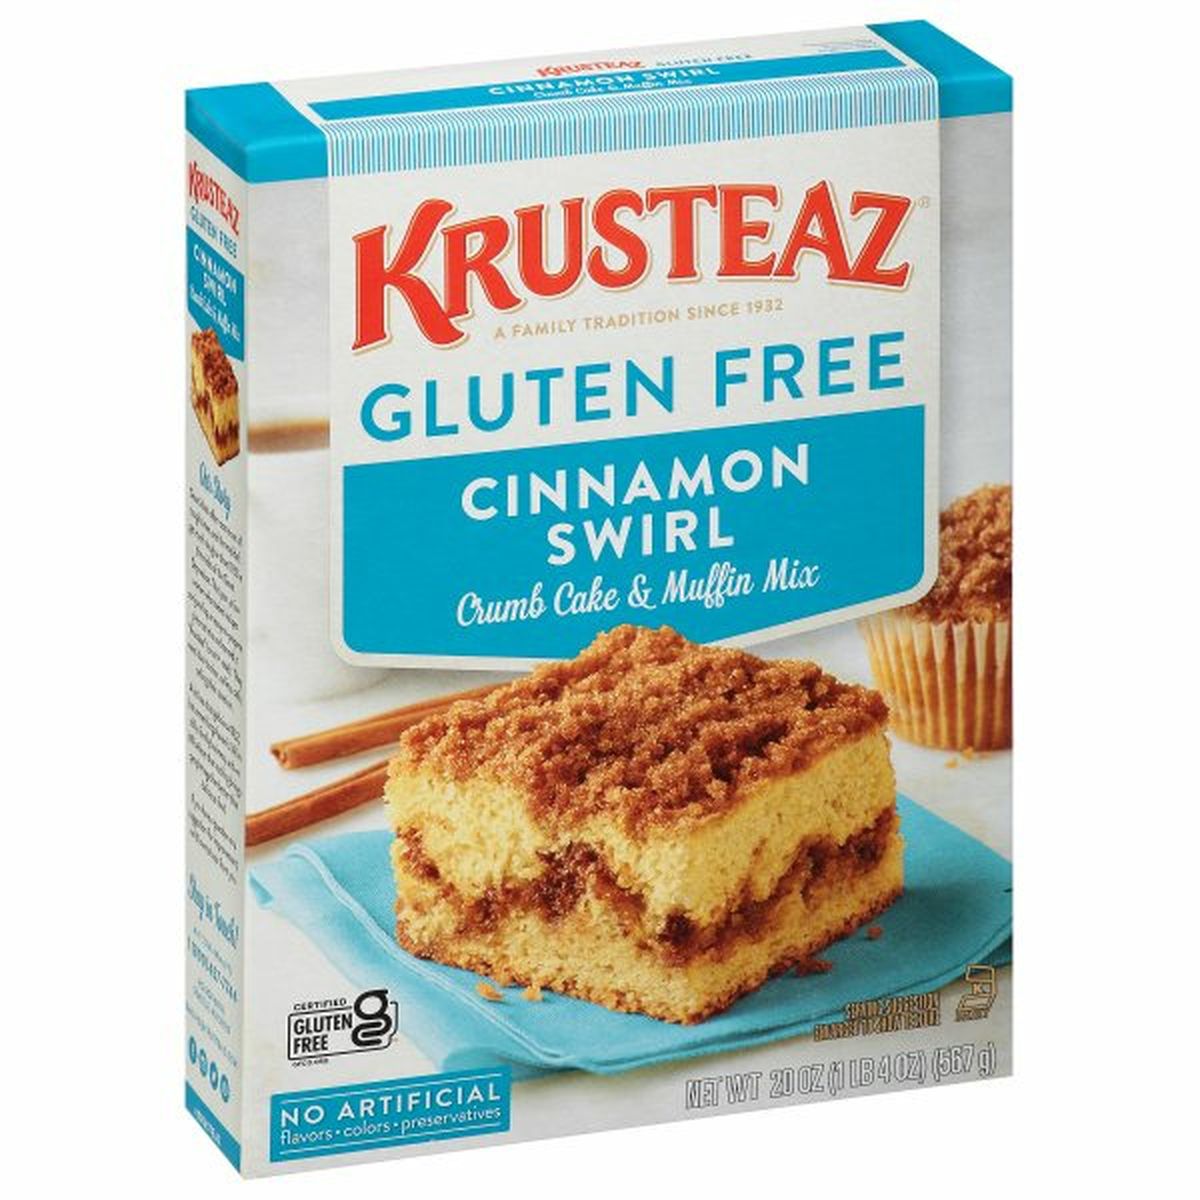 Calories in Krusteaz Crumb Cake & Muffin Mix, Gluten Free, Cinnamon Swirl